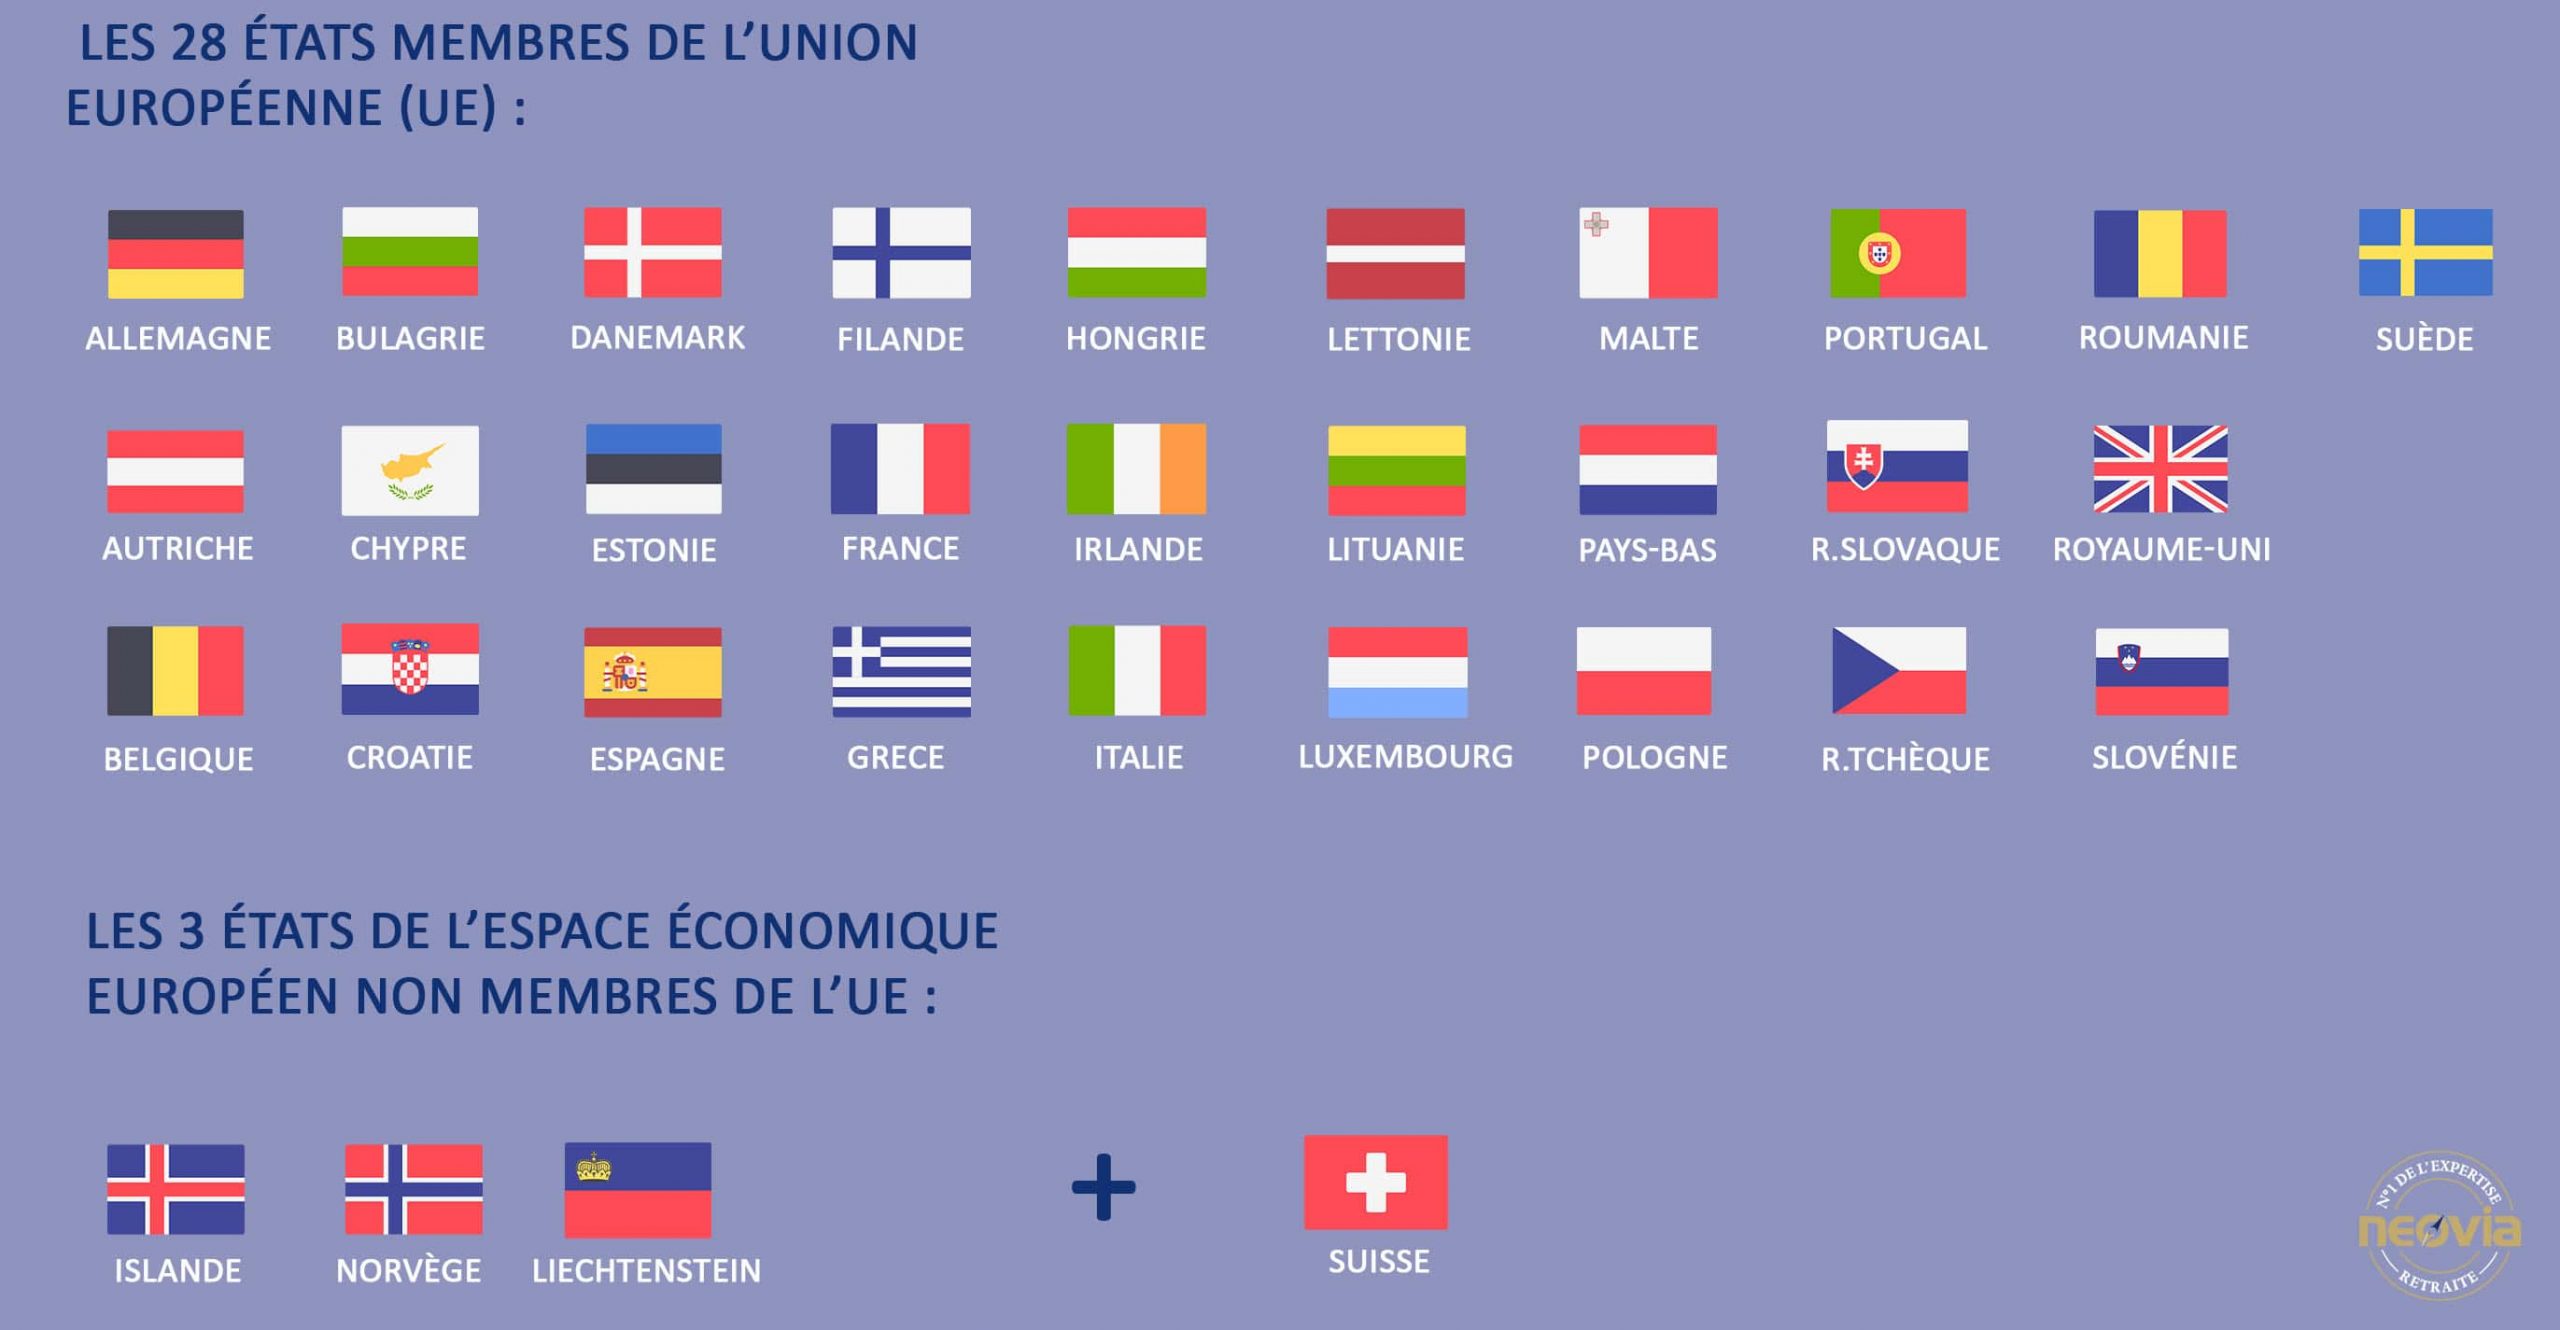 Les 28 Etats membres de l'UE et les 3 Etats de l'espace économique européen non membres de l'UE